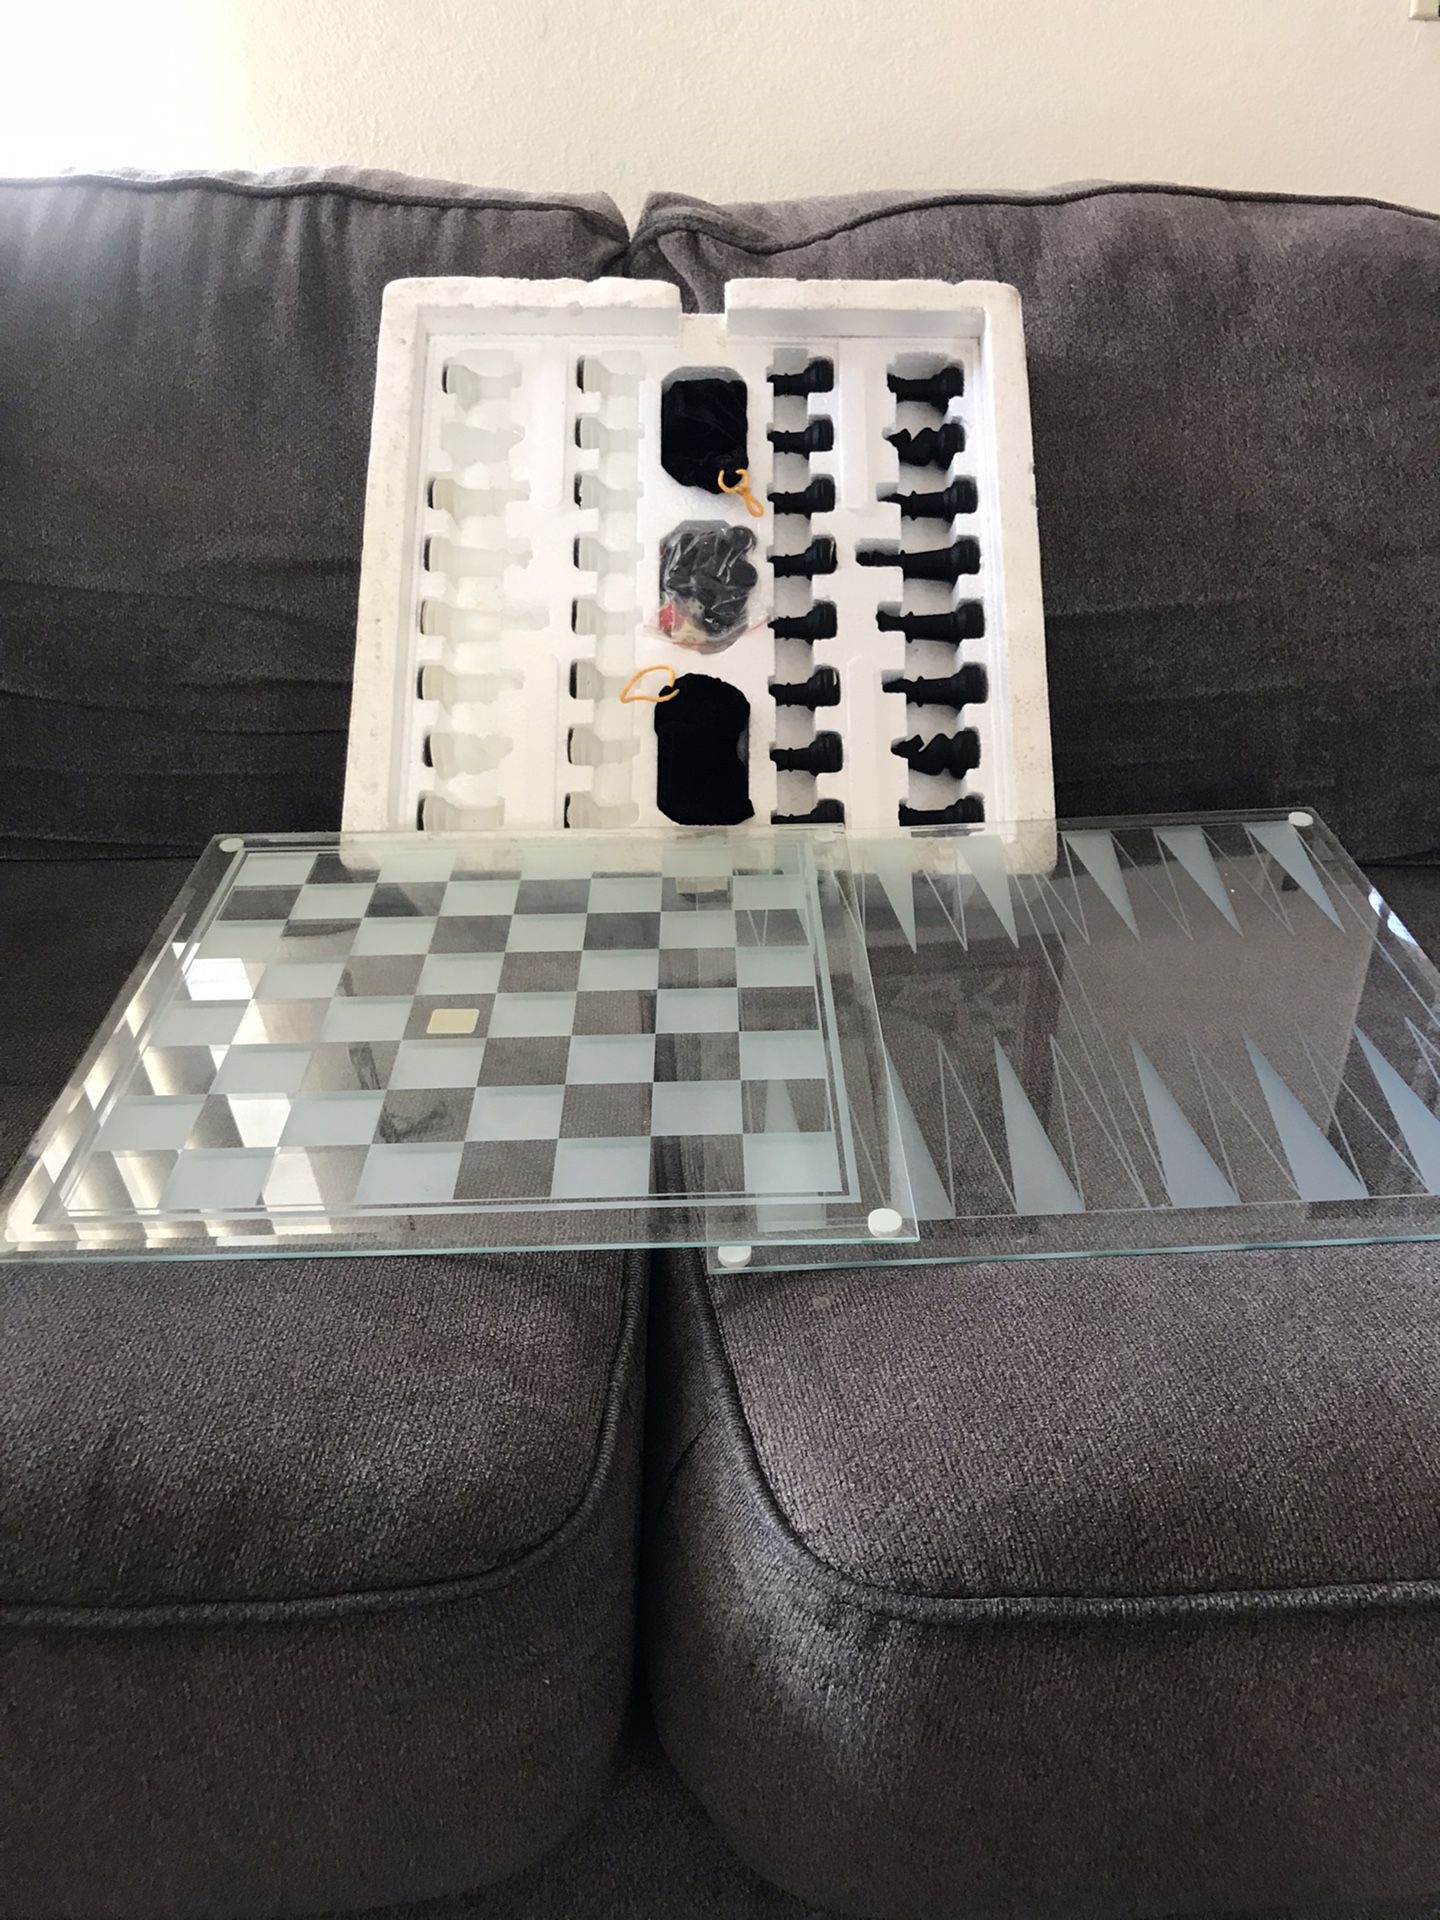 New Chessboard Set 